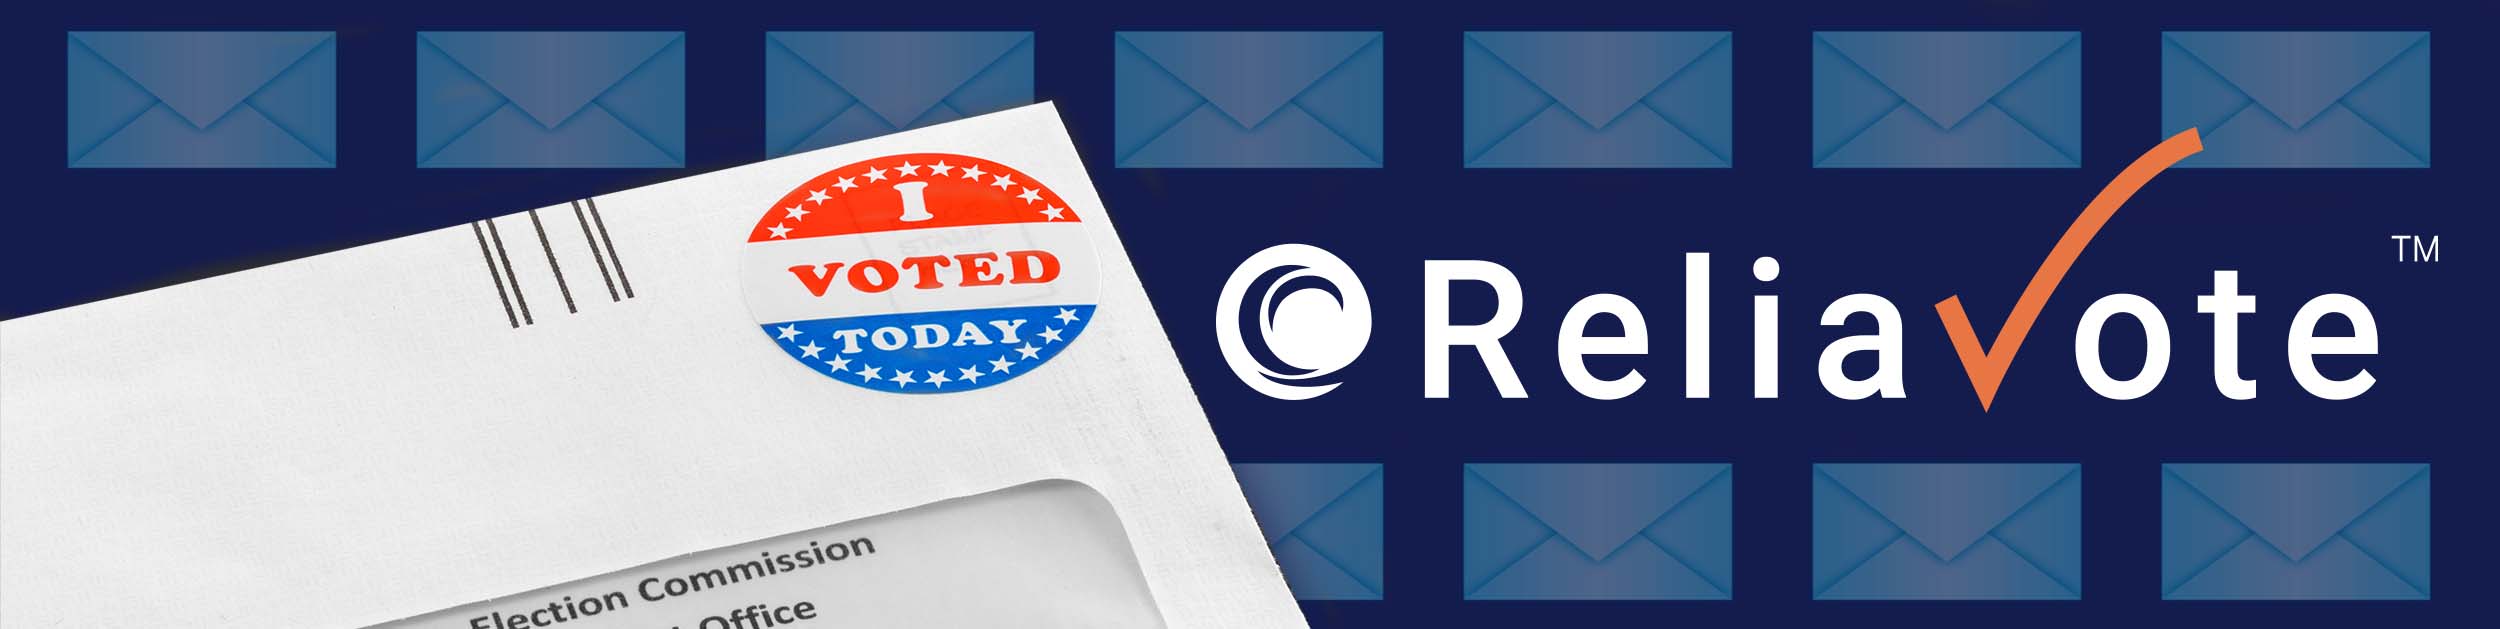 Vote by mail return envelope